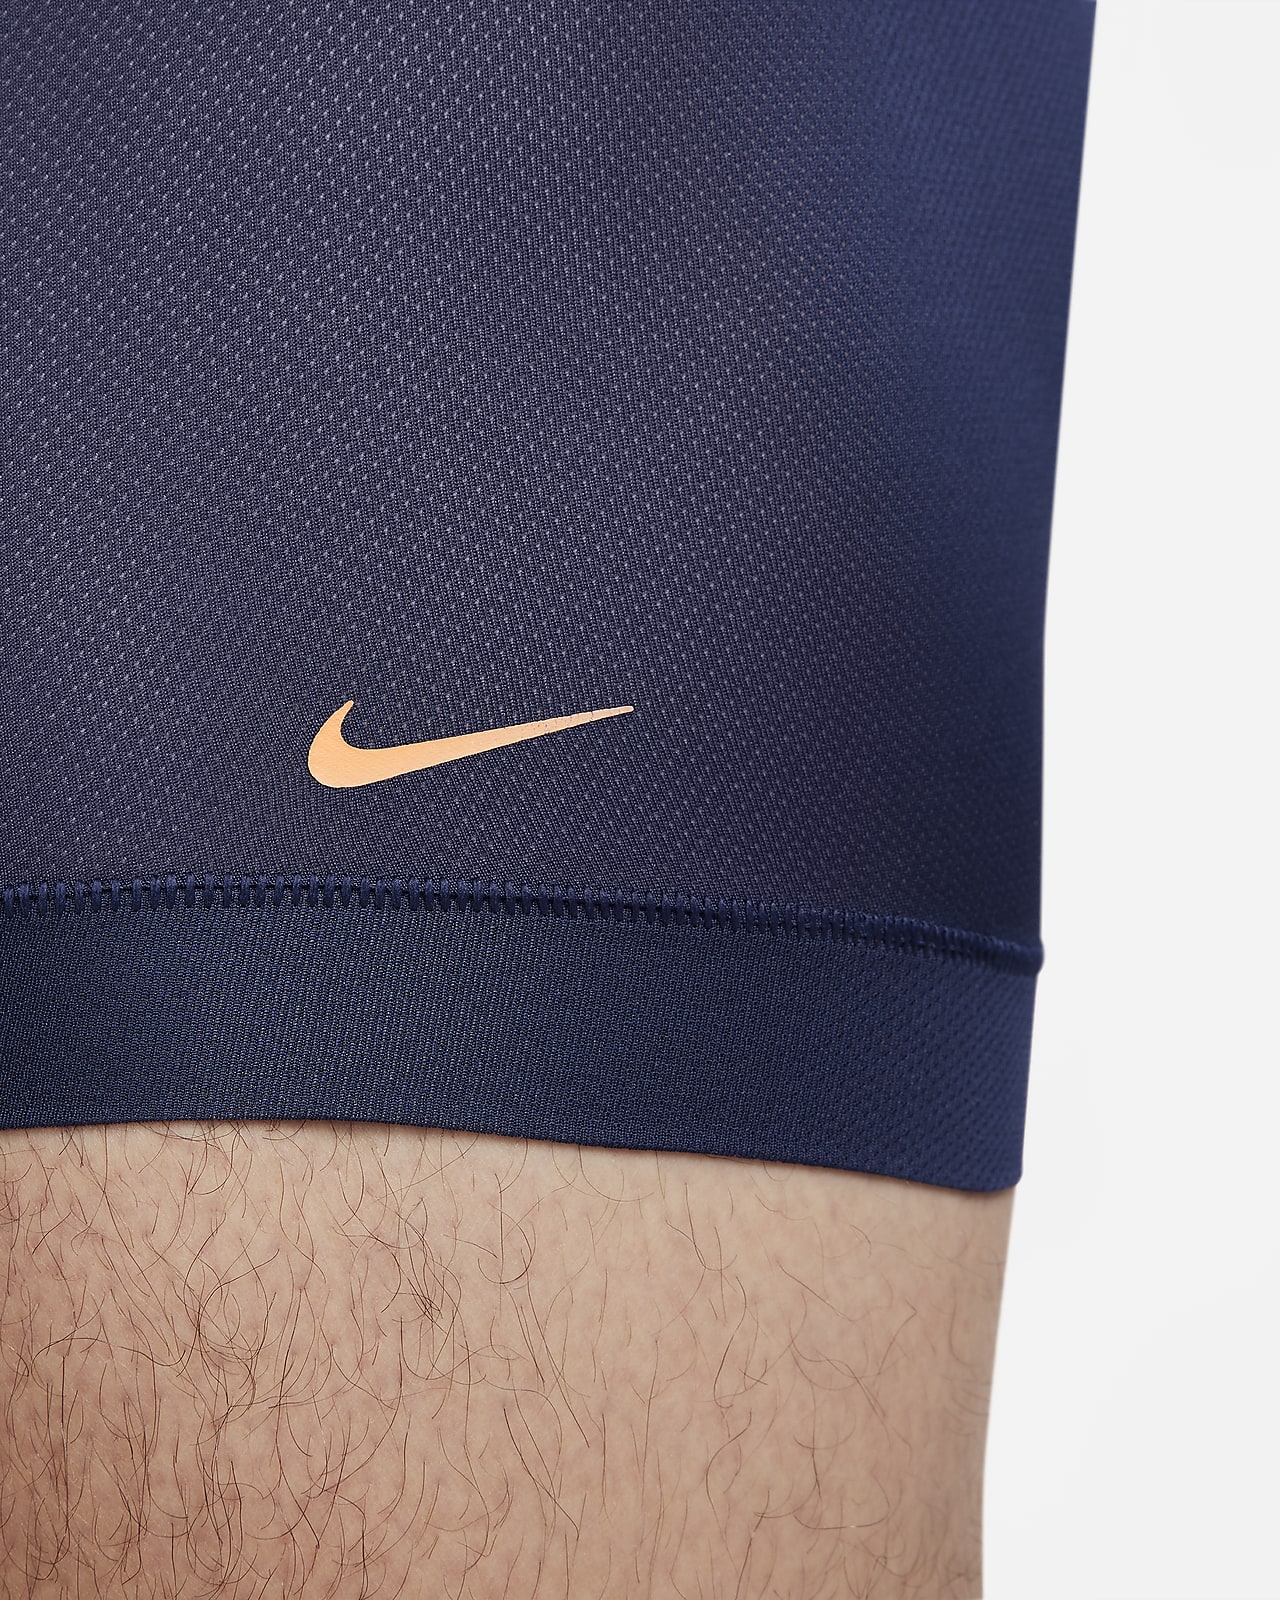 Nike Dri-FIT Elite Micro Men's Underwear Boxers - Deep Royal